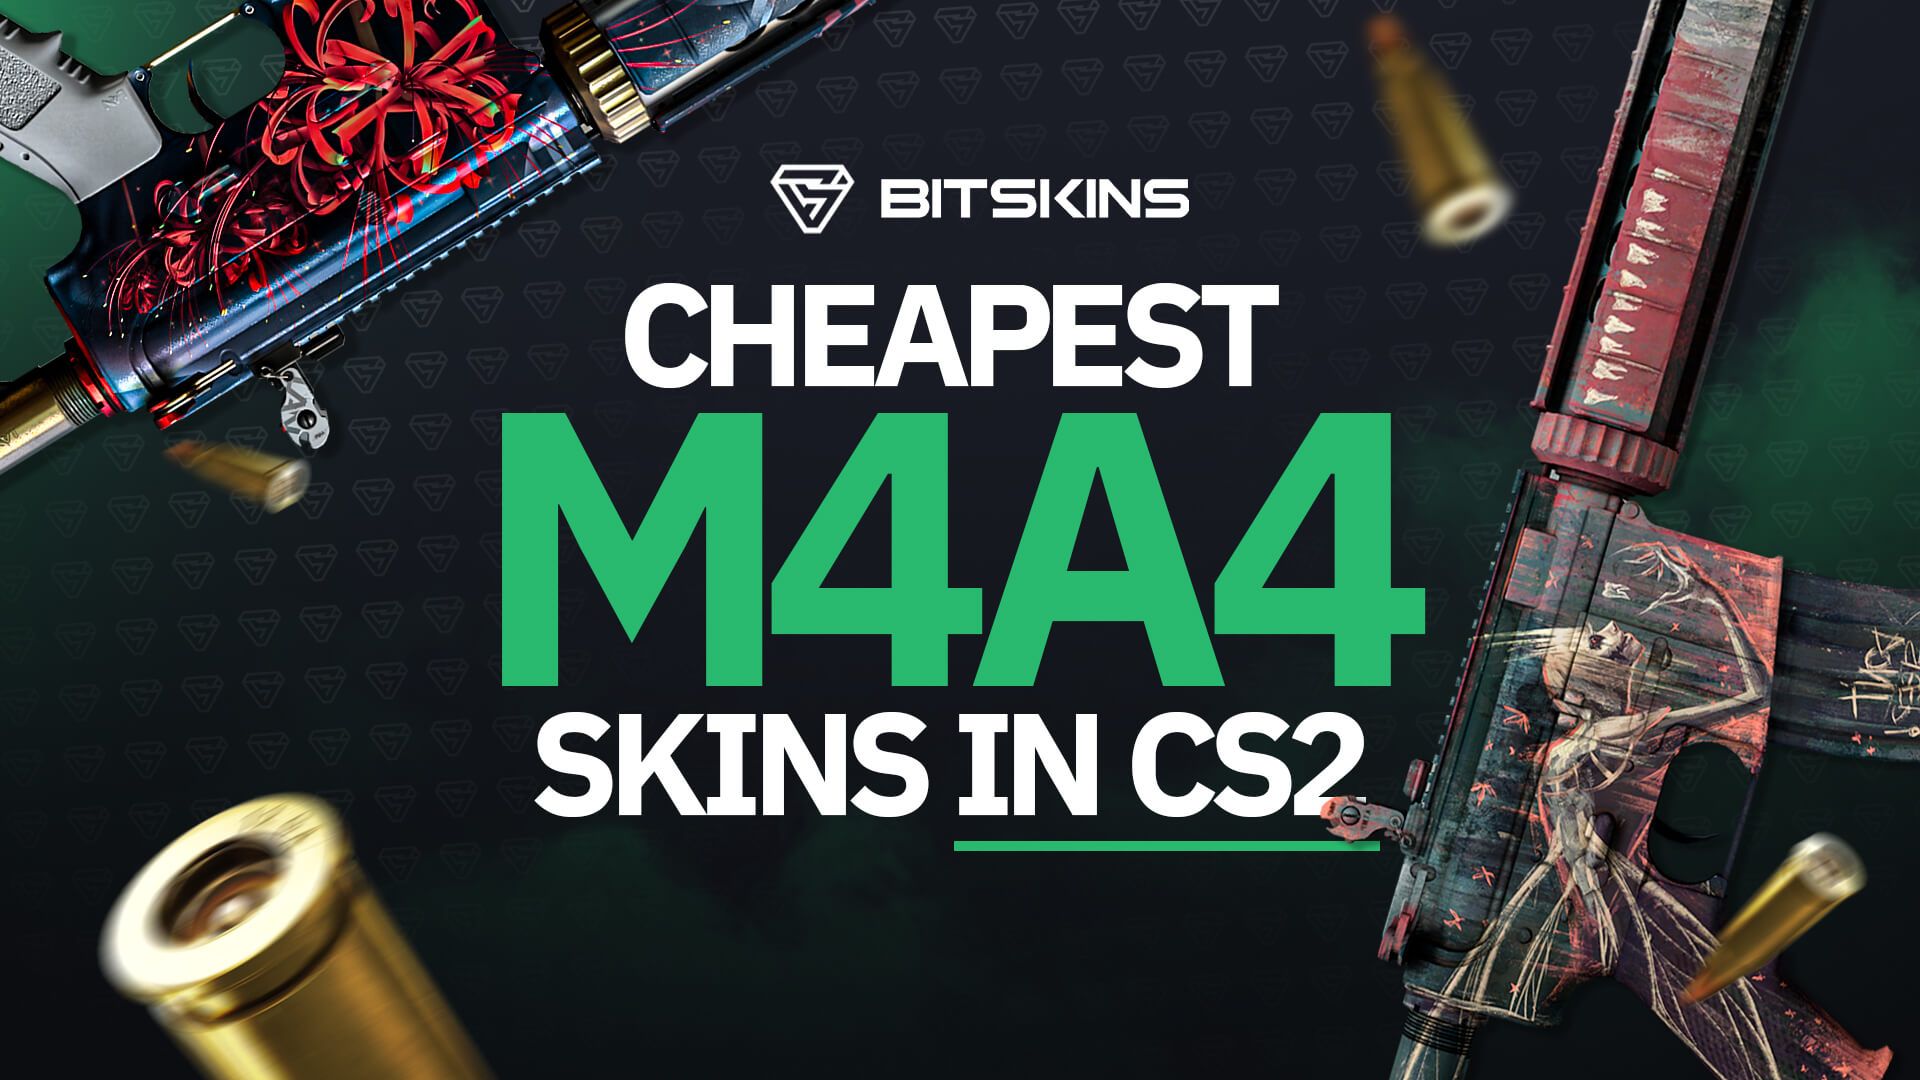 TOP 10 Best Cheap M4A4 Skins in CS2